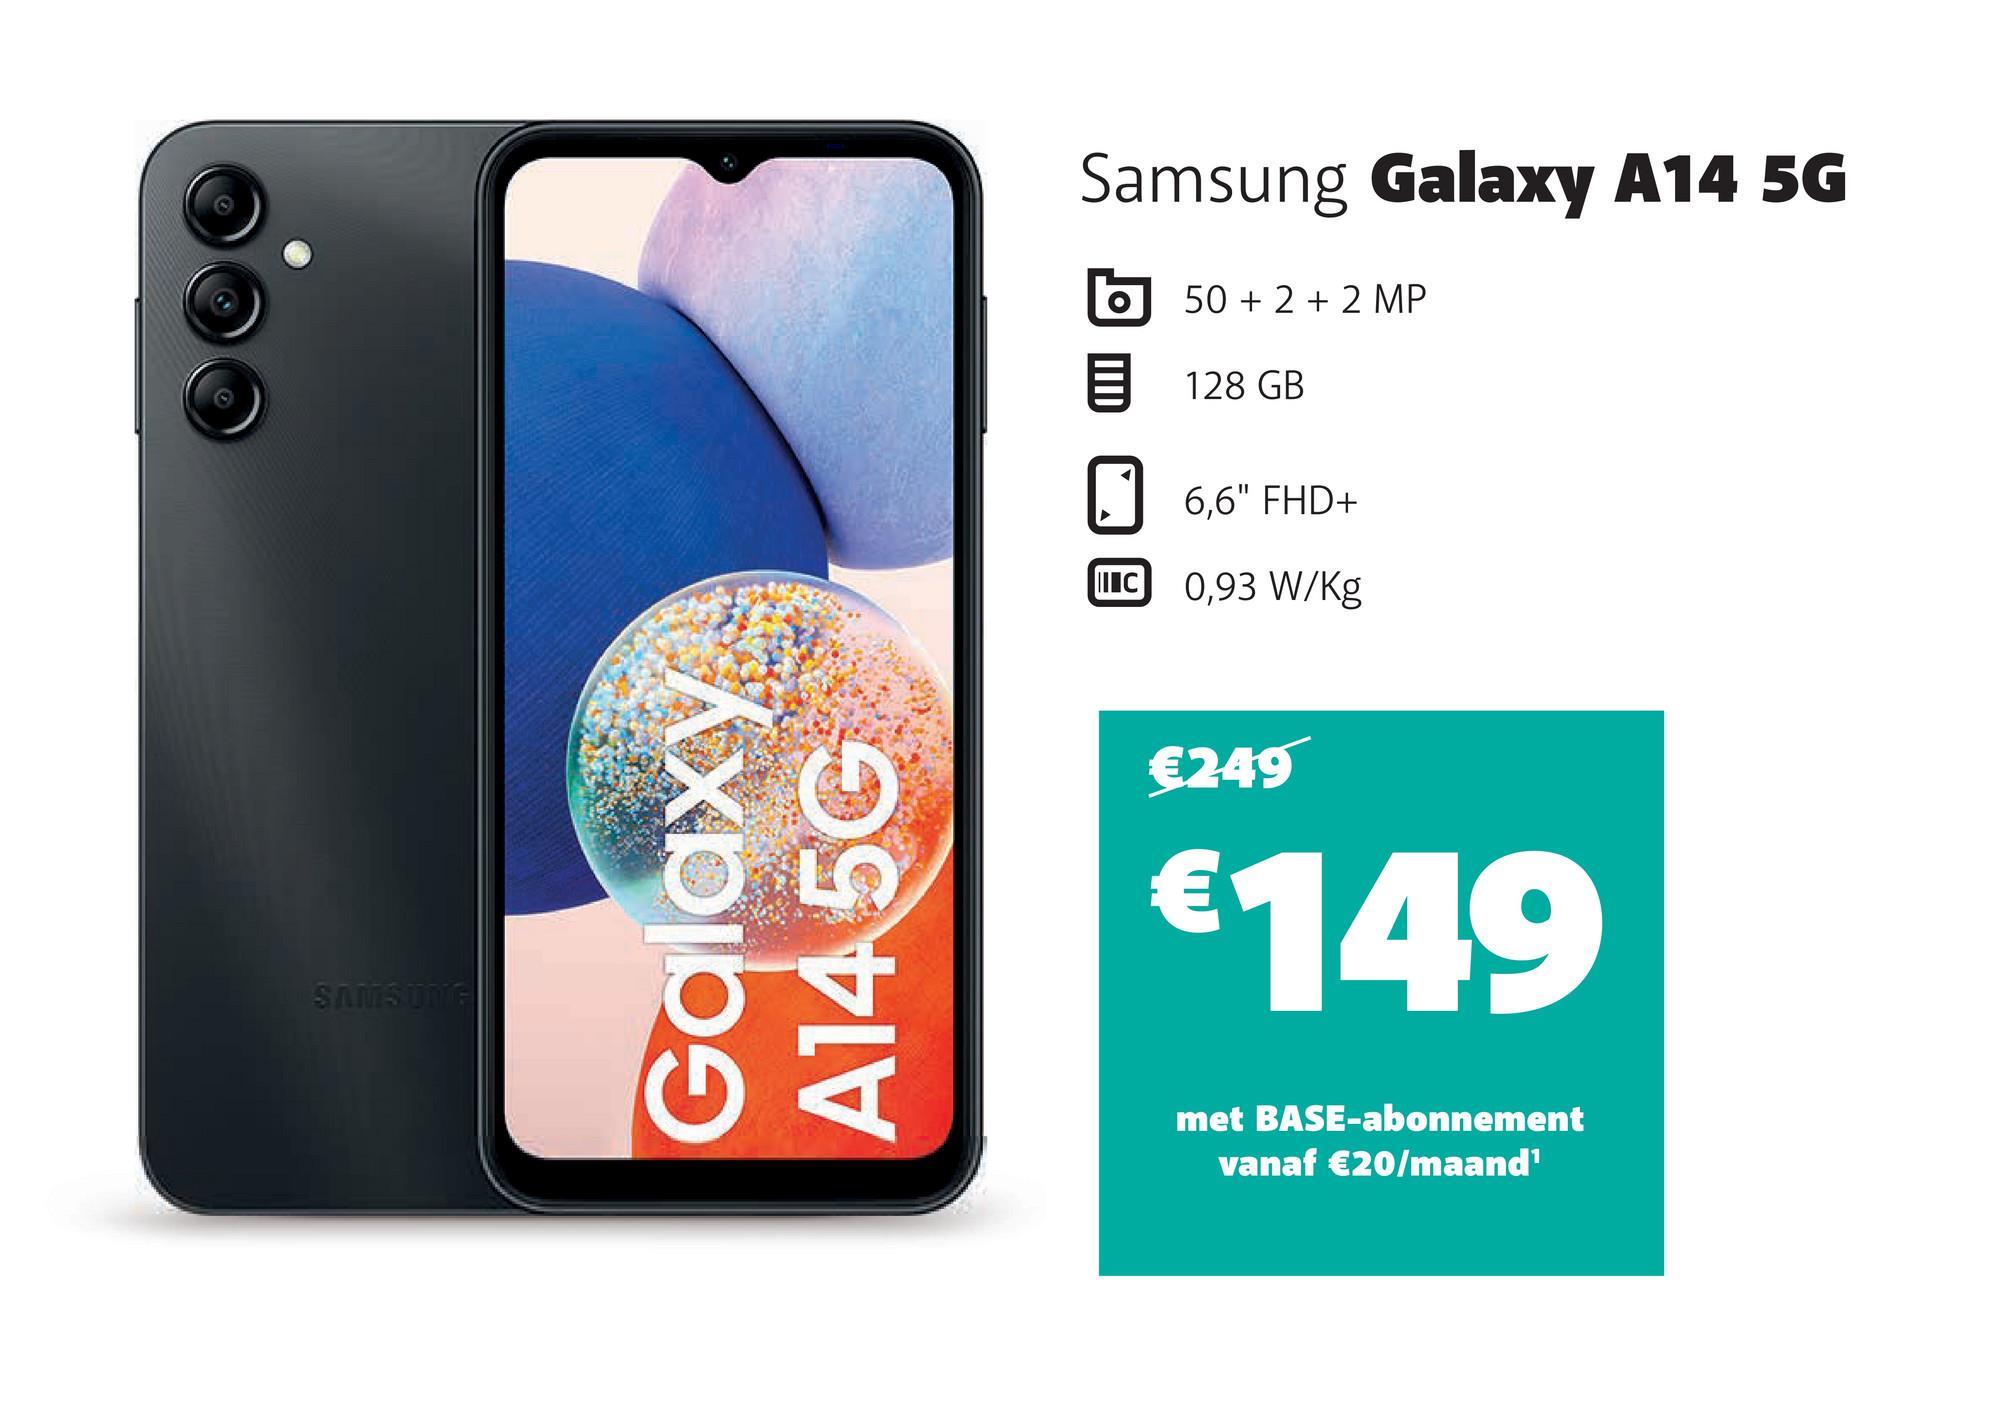 SAMSUNE
Galaxy
A14 5G
Samsung Galaxy A14 5G
50+ 2 + 2 MP
128 GB
6,6" FHD+
C0,93 W/Kg
€249
€149
met BASE-abonnement
vanaf €20/maand¹